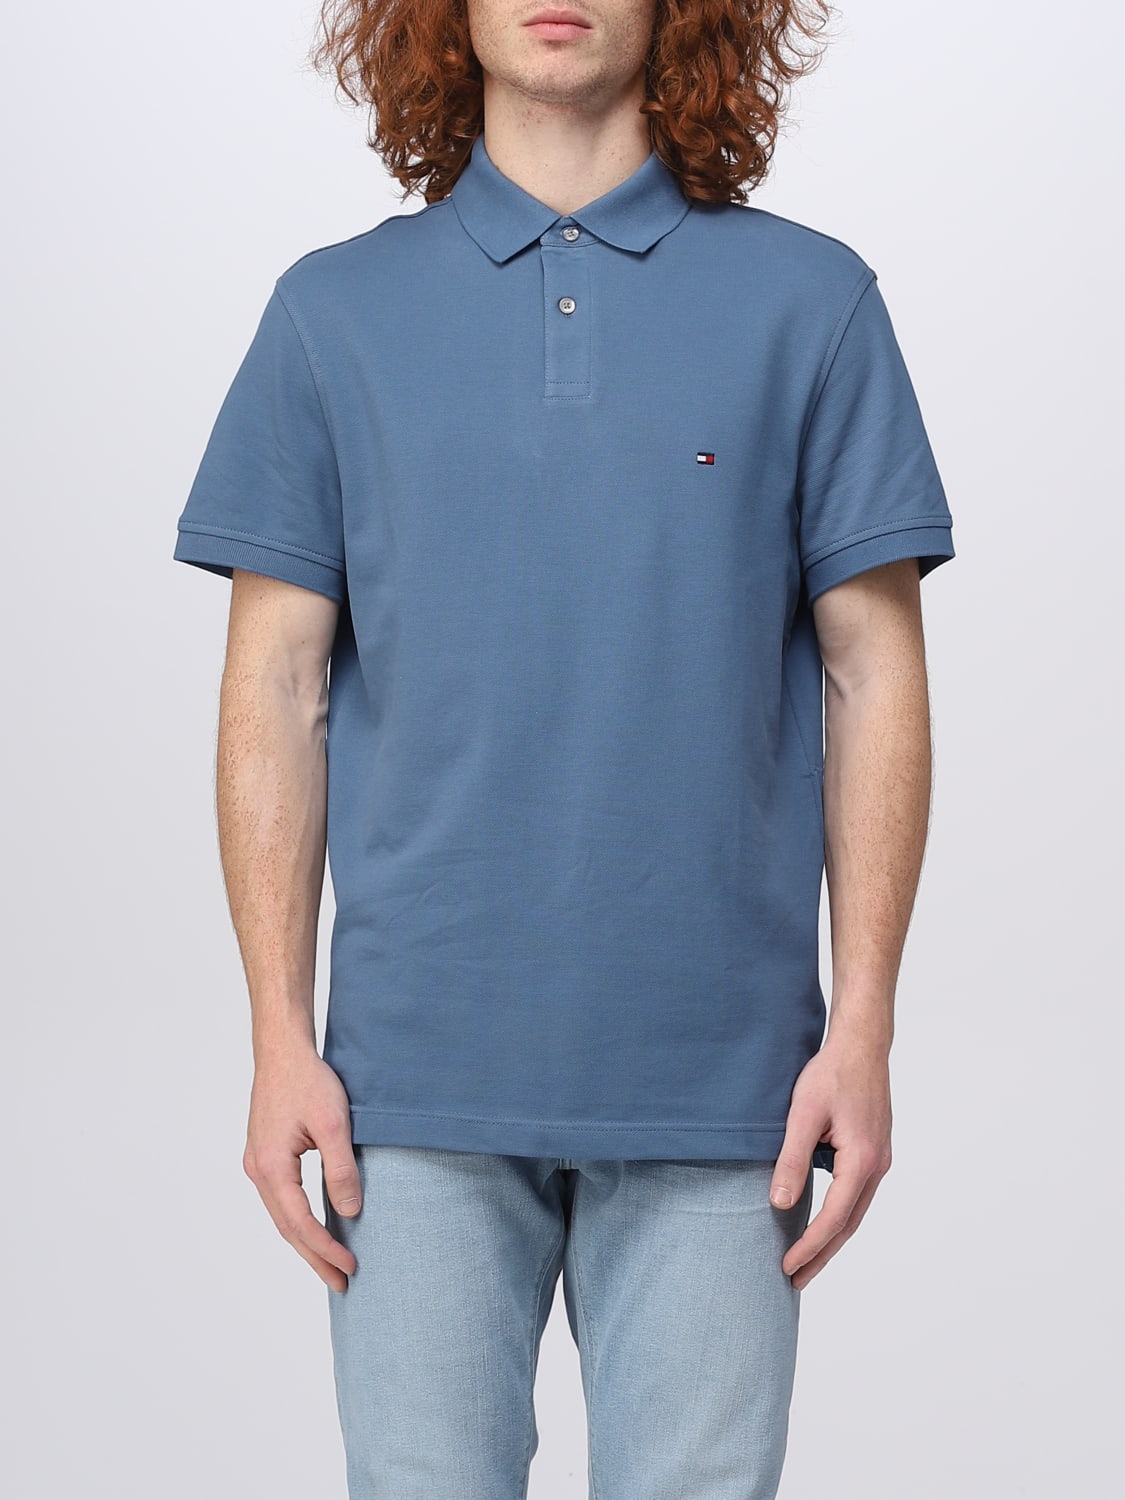 TOMMY HILFIGER: polo shirt for man - Blue | Hilfiger polo shirt MW0MW17770 on